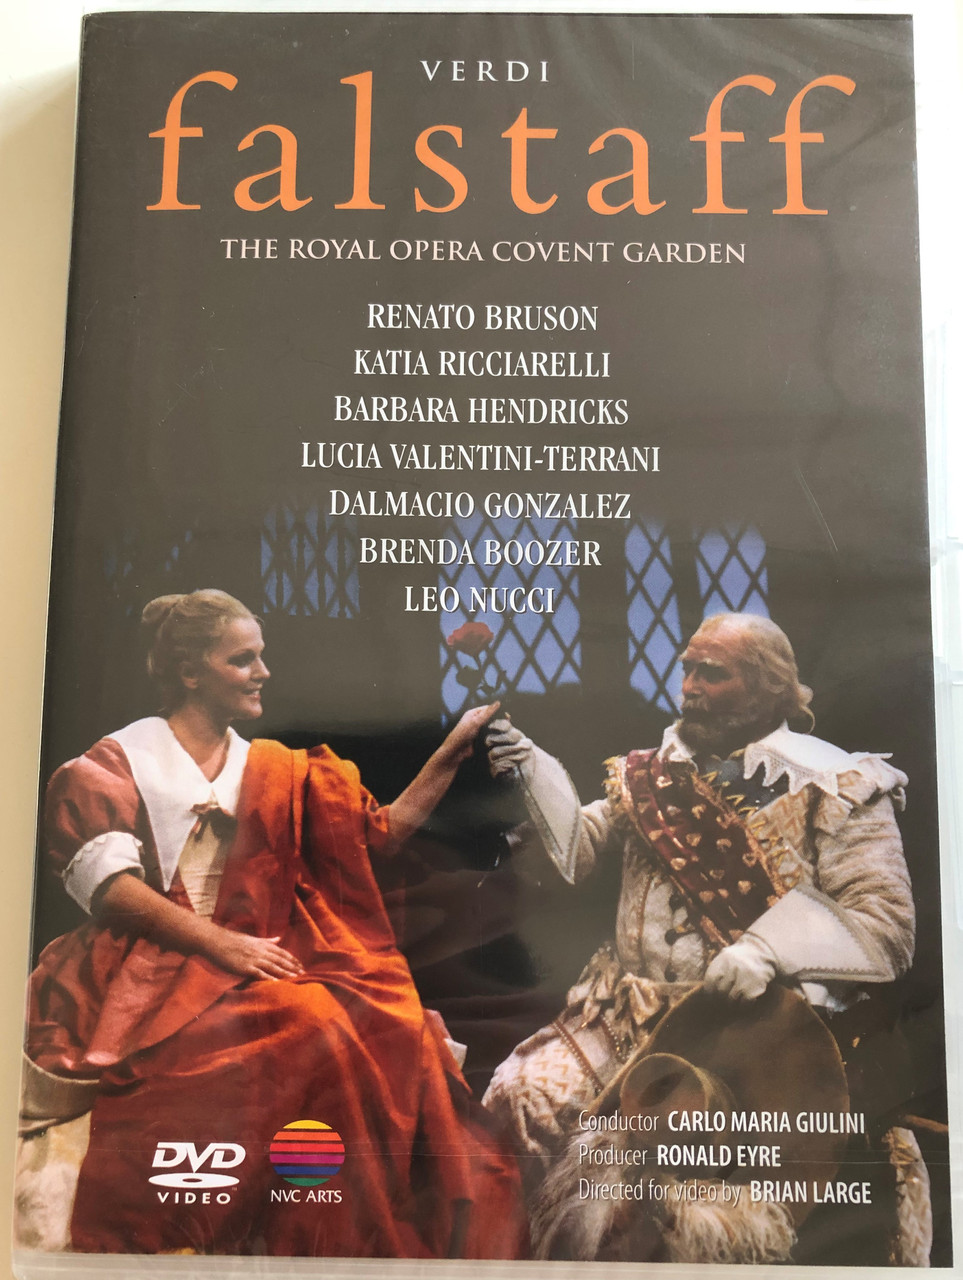 Verdi - falstaff DVD 1982 The Royal opera Covent Garden / Directed by Brian  Large / Conducted by Carlo Maria Giulini / Libretto Arrigo Boito / NVC Arts  - bibleinmylanguage